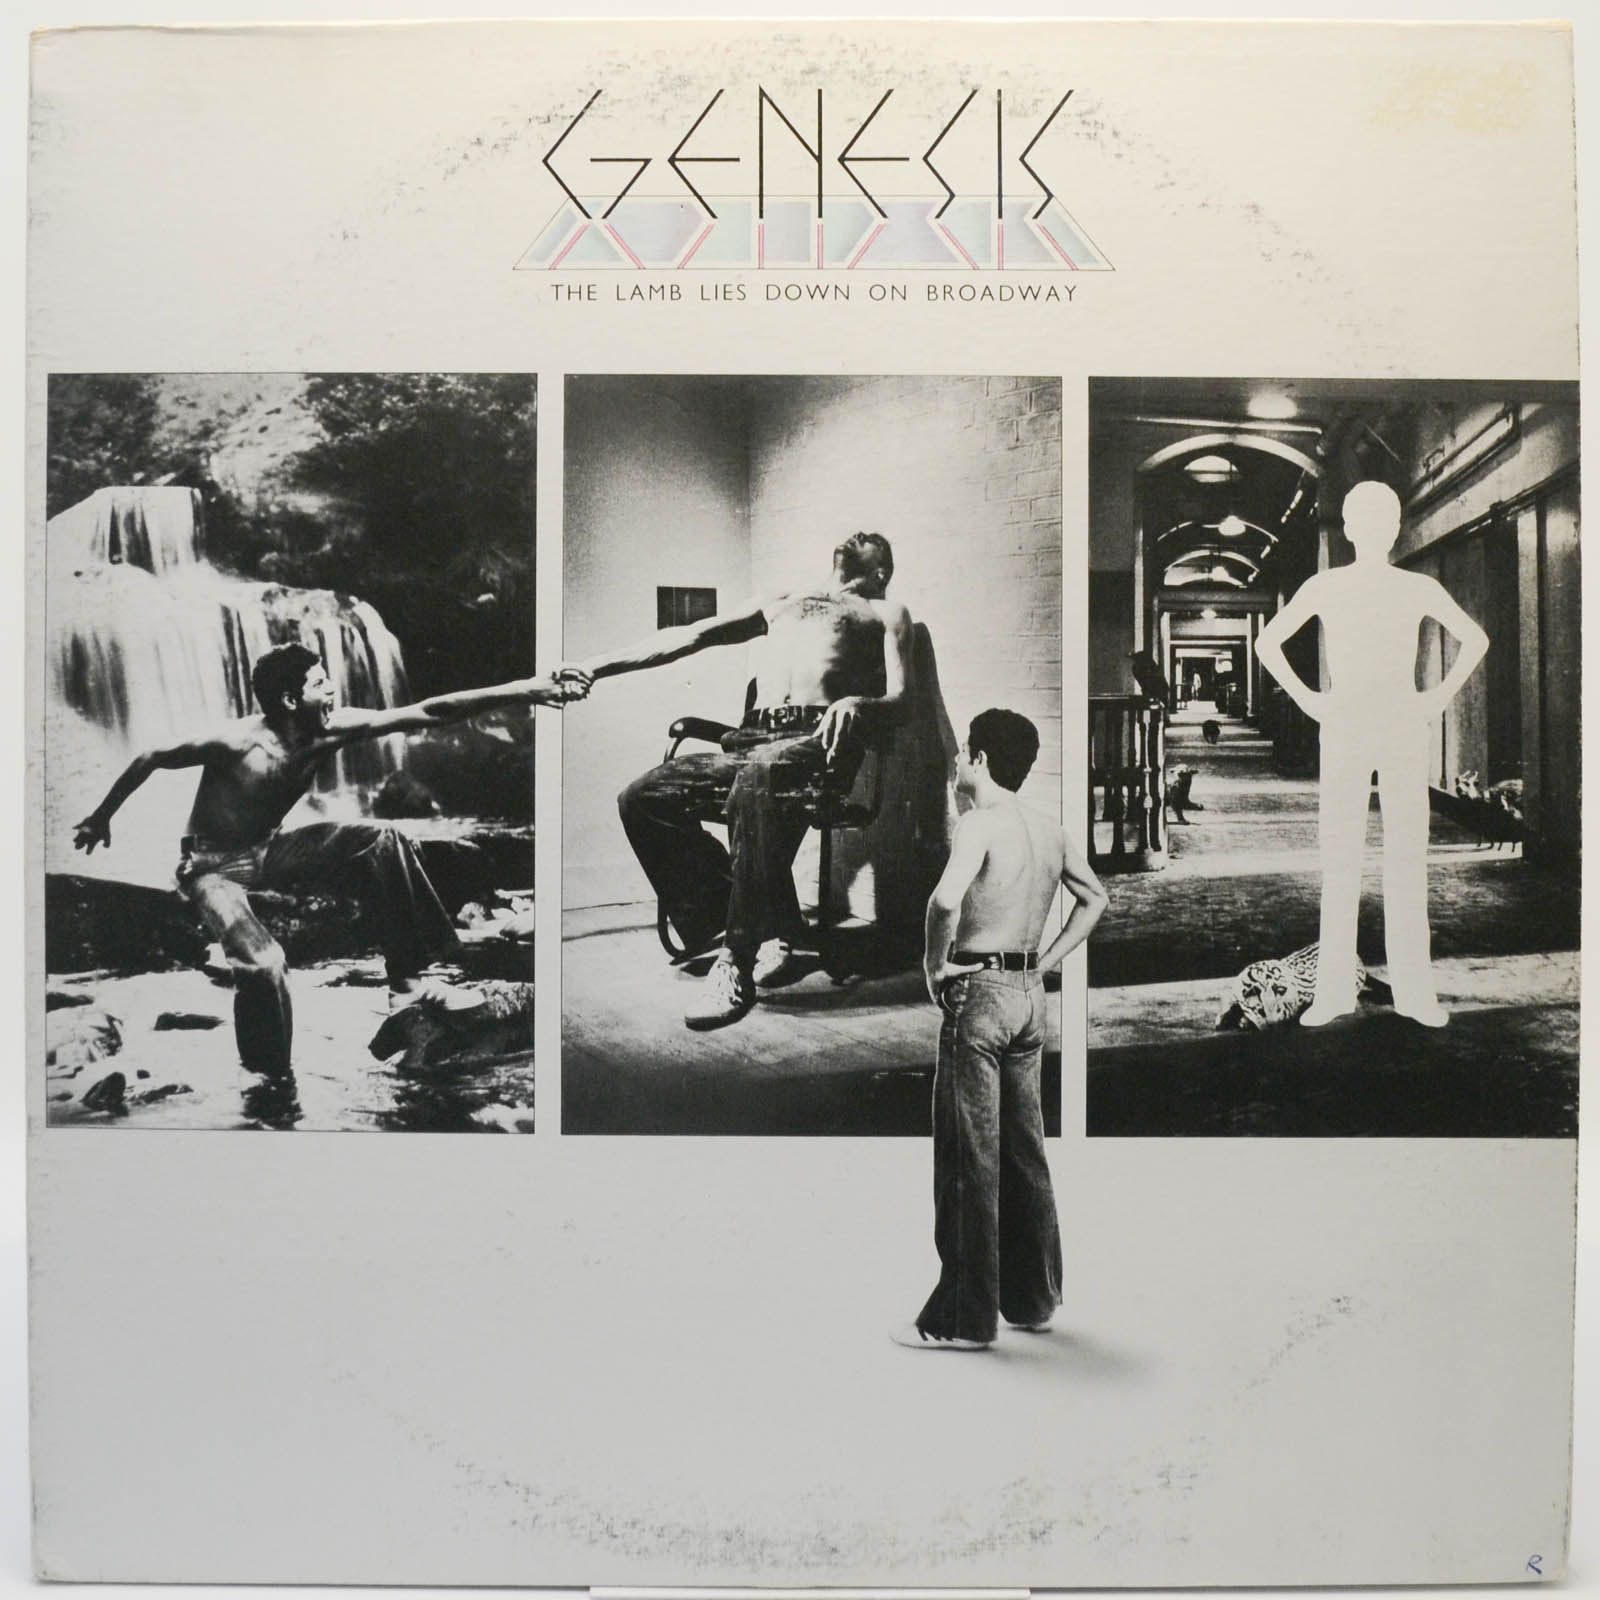 Genesis — The Lamb Lies Down On Broadway (2LP, USA), 1974